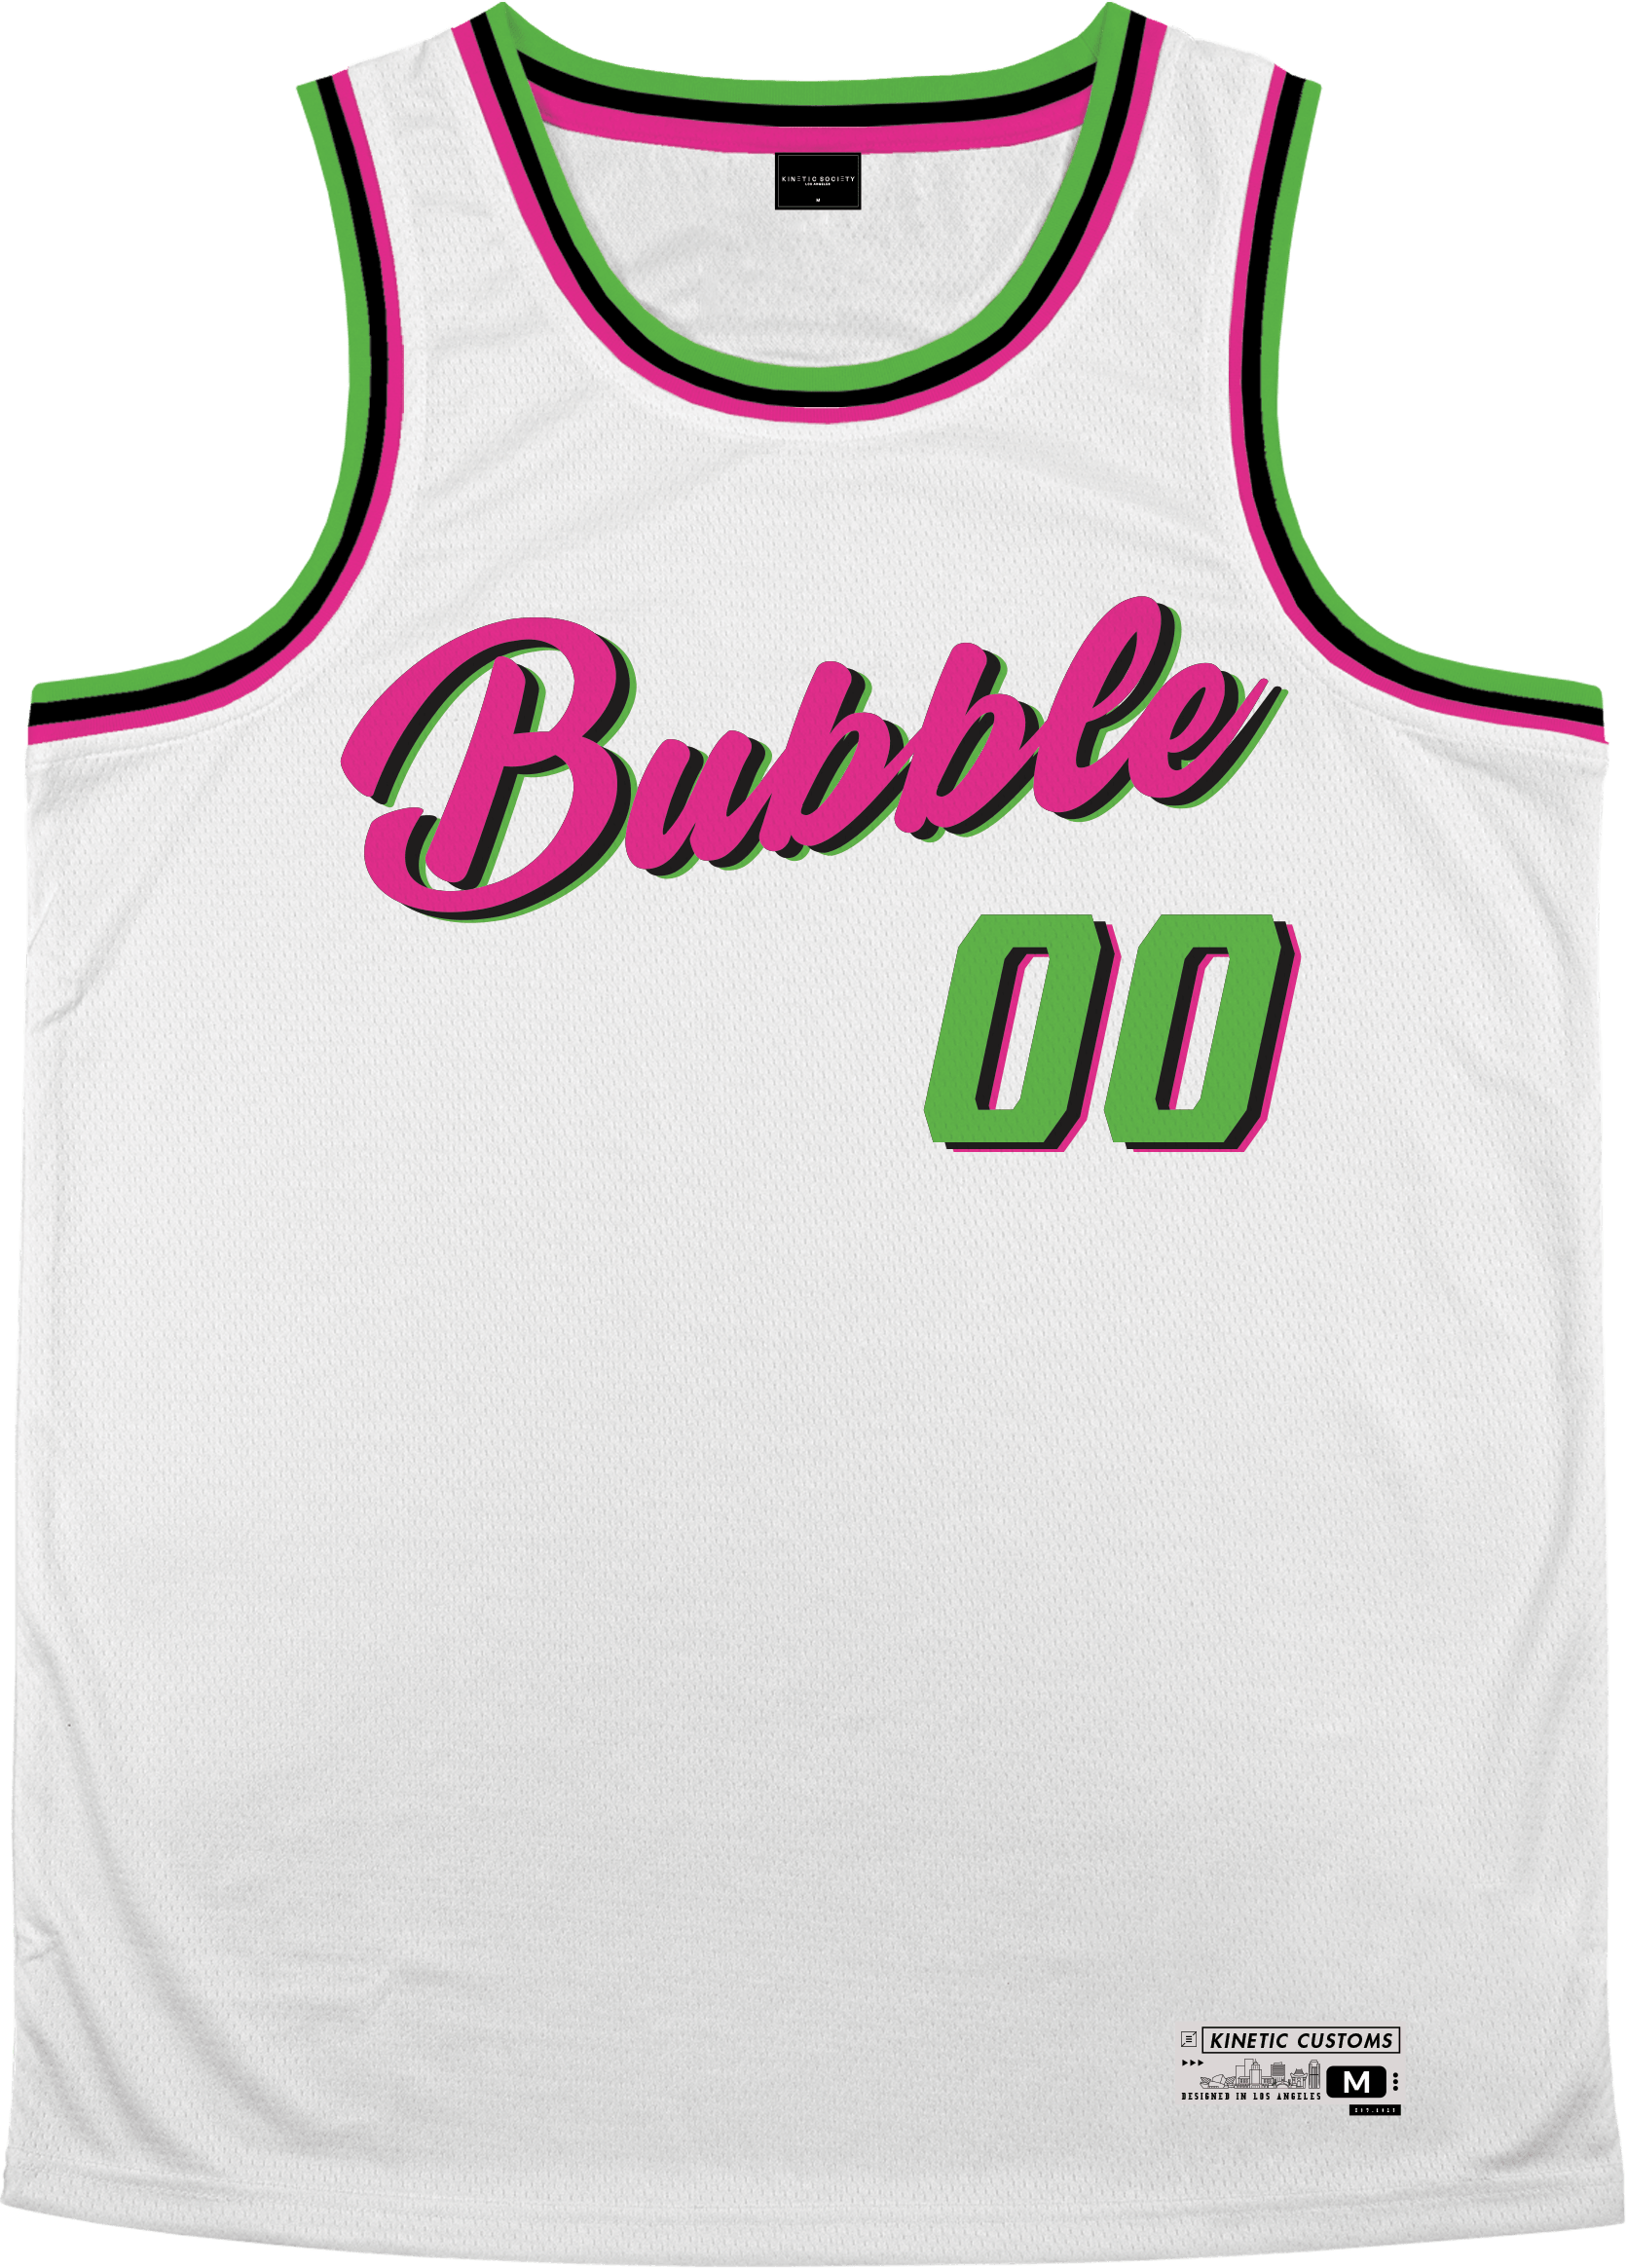 Kinetic ID - Bubblegum Basketball Jersey Premium Basketball Kinetic Society LLC 